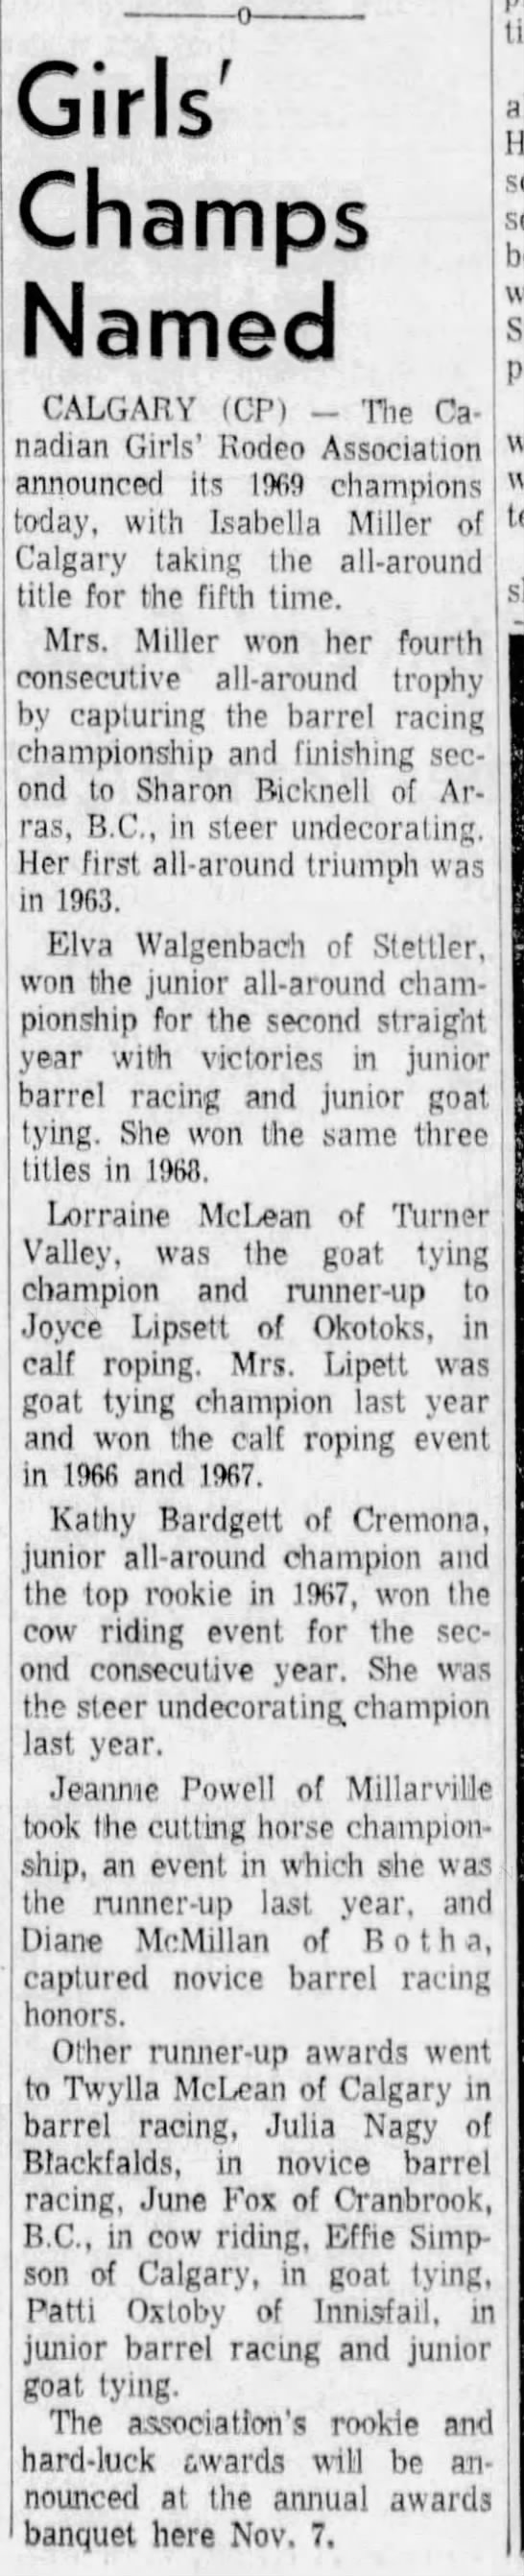 Girls' Champs Named. (1 November 1969) Red Deer, Alberta: The Red Deer Advocate. p 7 - 